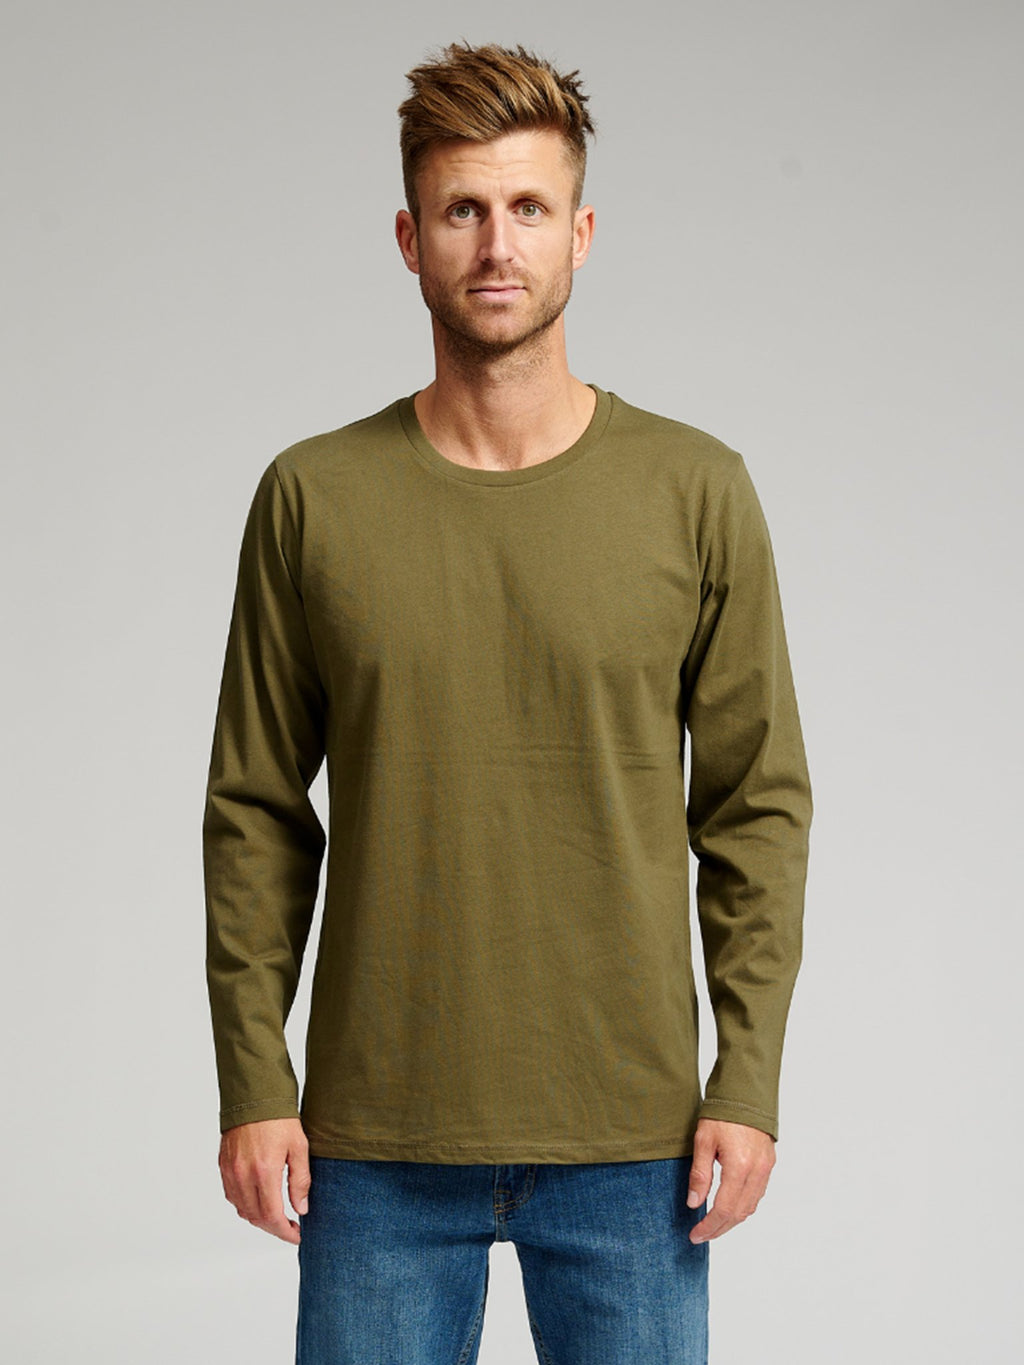 Basic T-shirt με μακριά μανίκια-Πράσινο στρατό